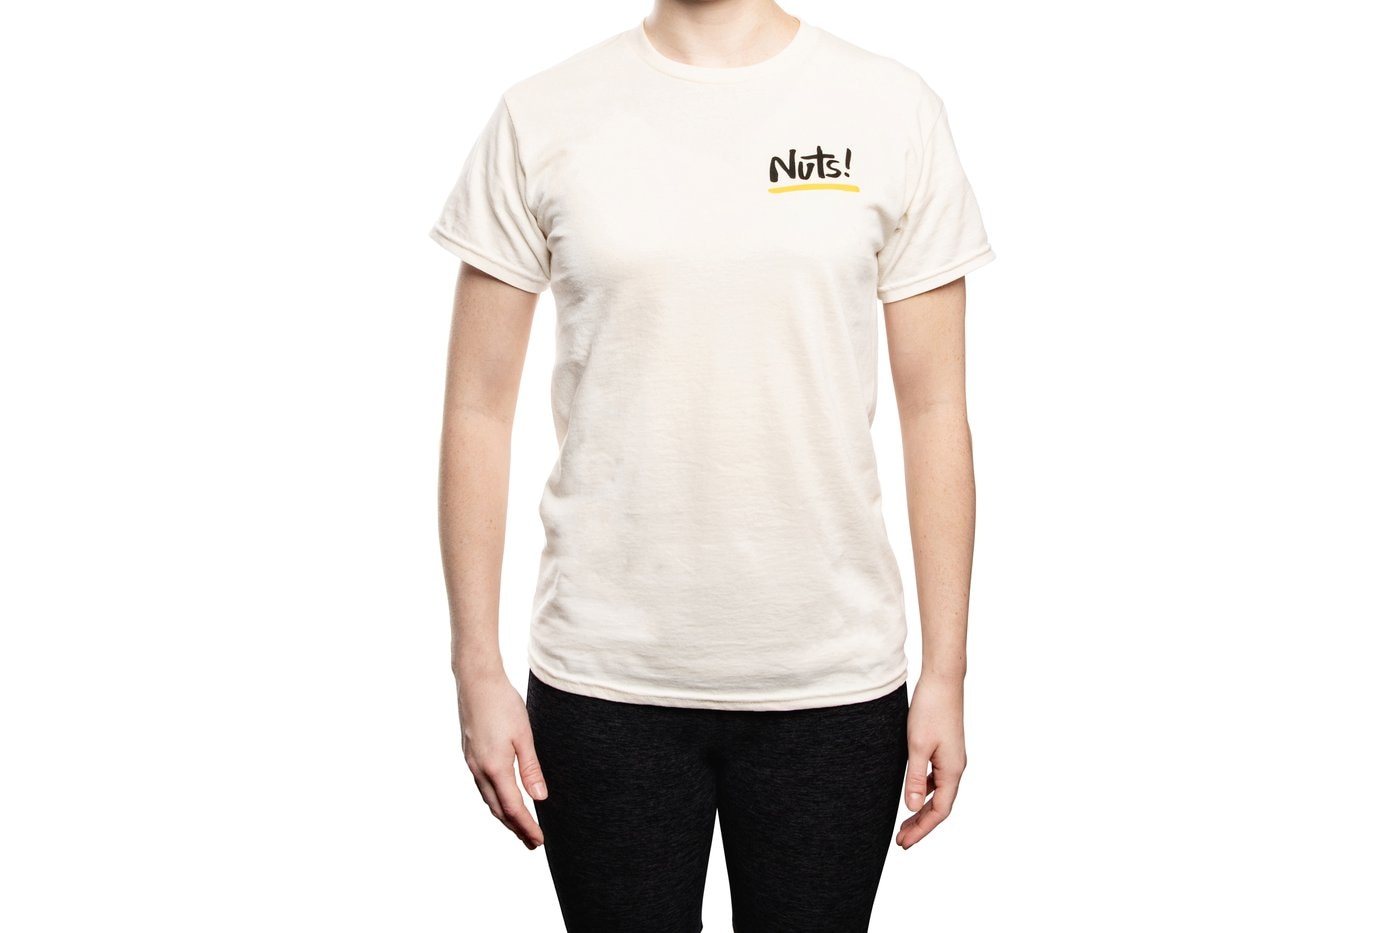 Nuts.com T-Shirt (Small) photo